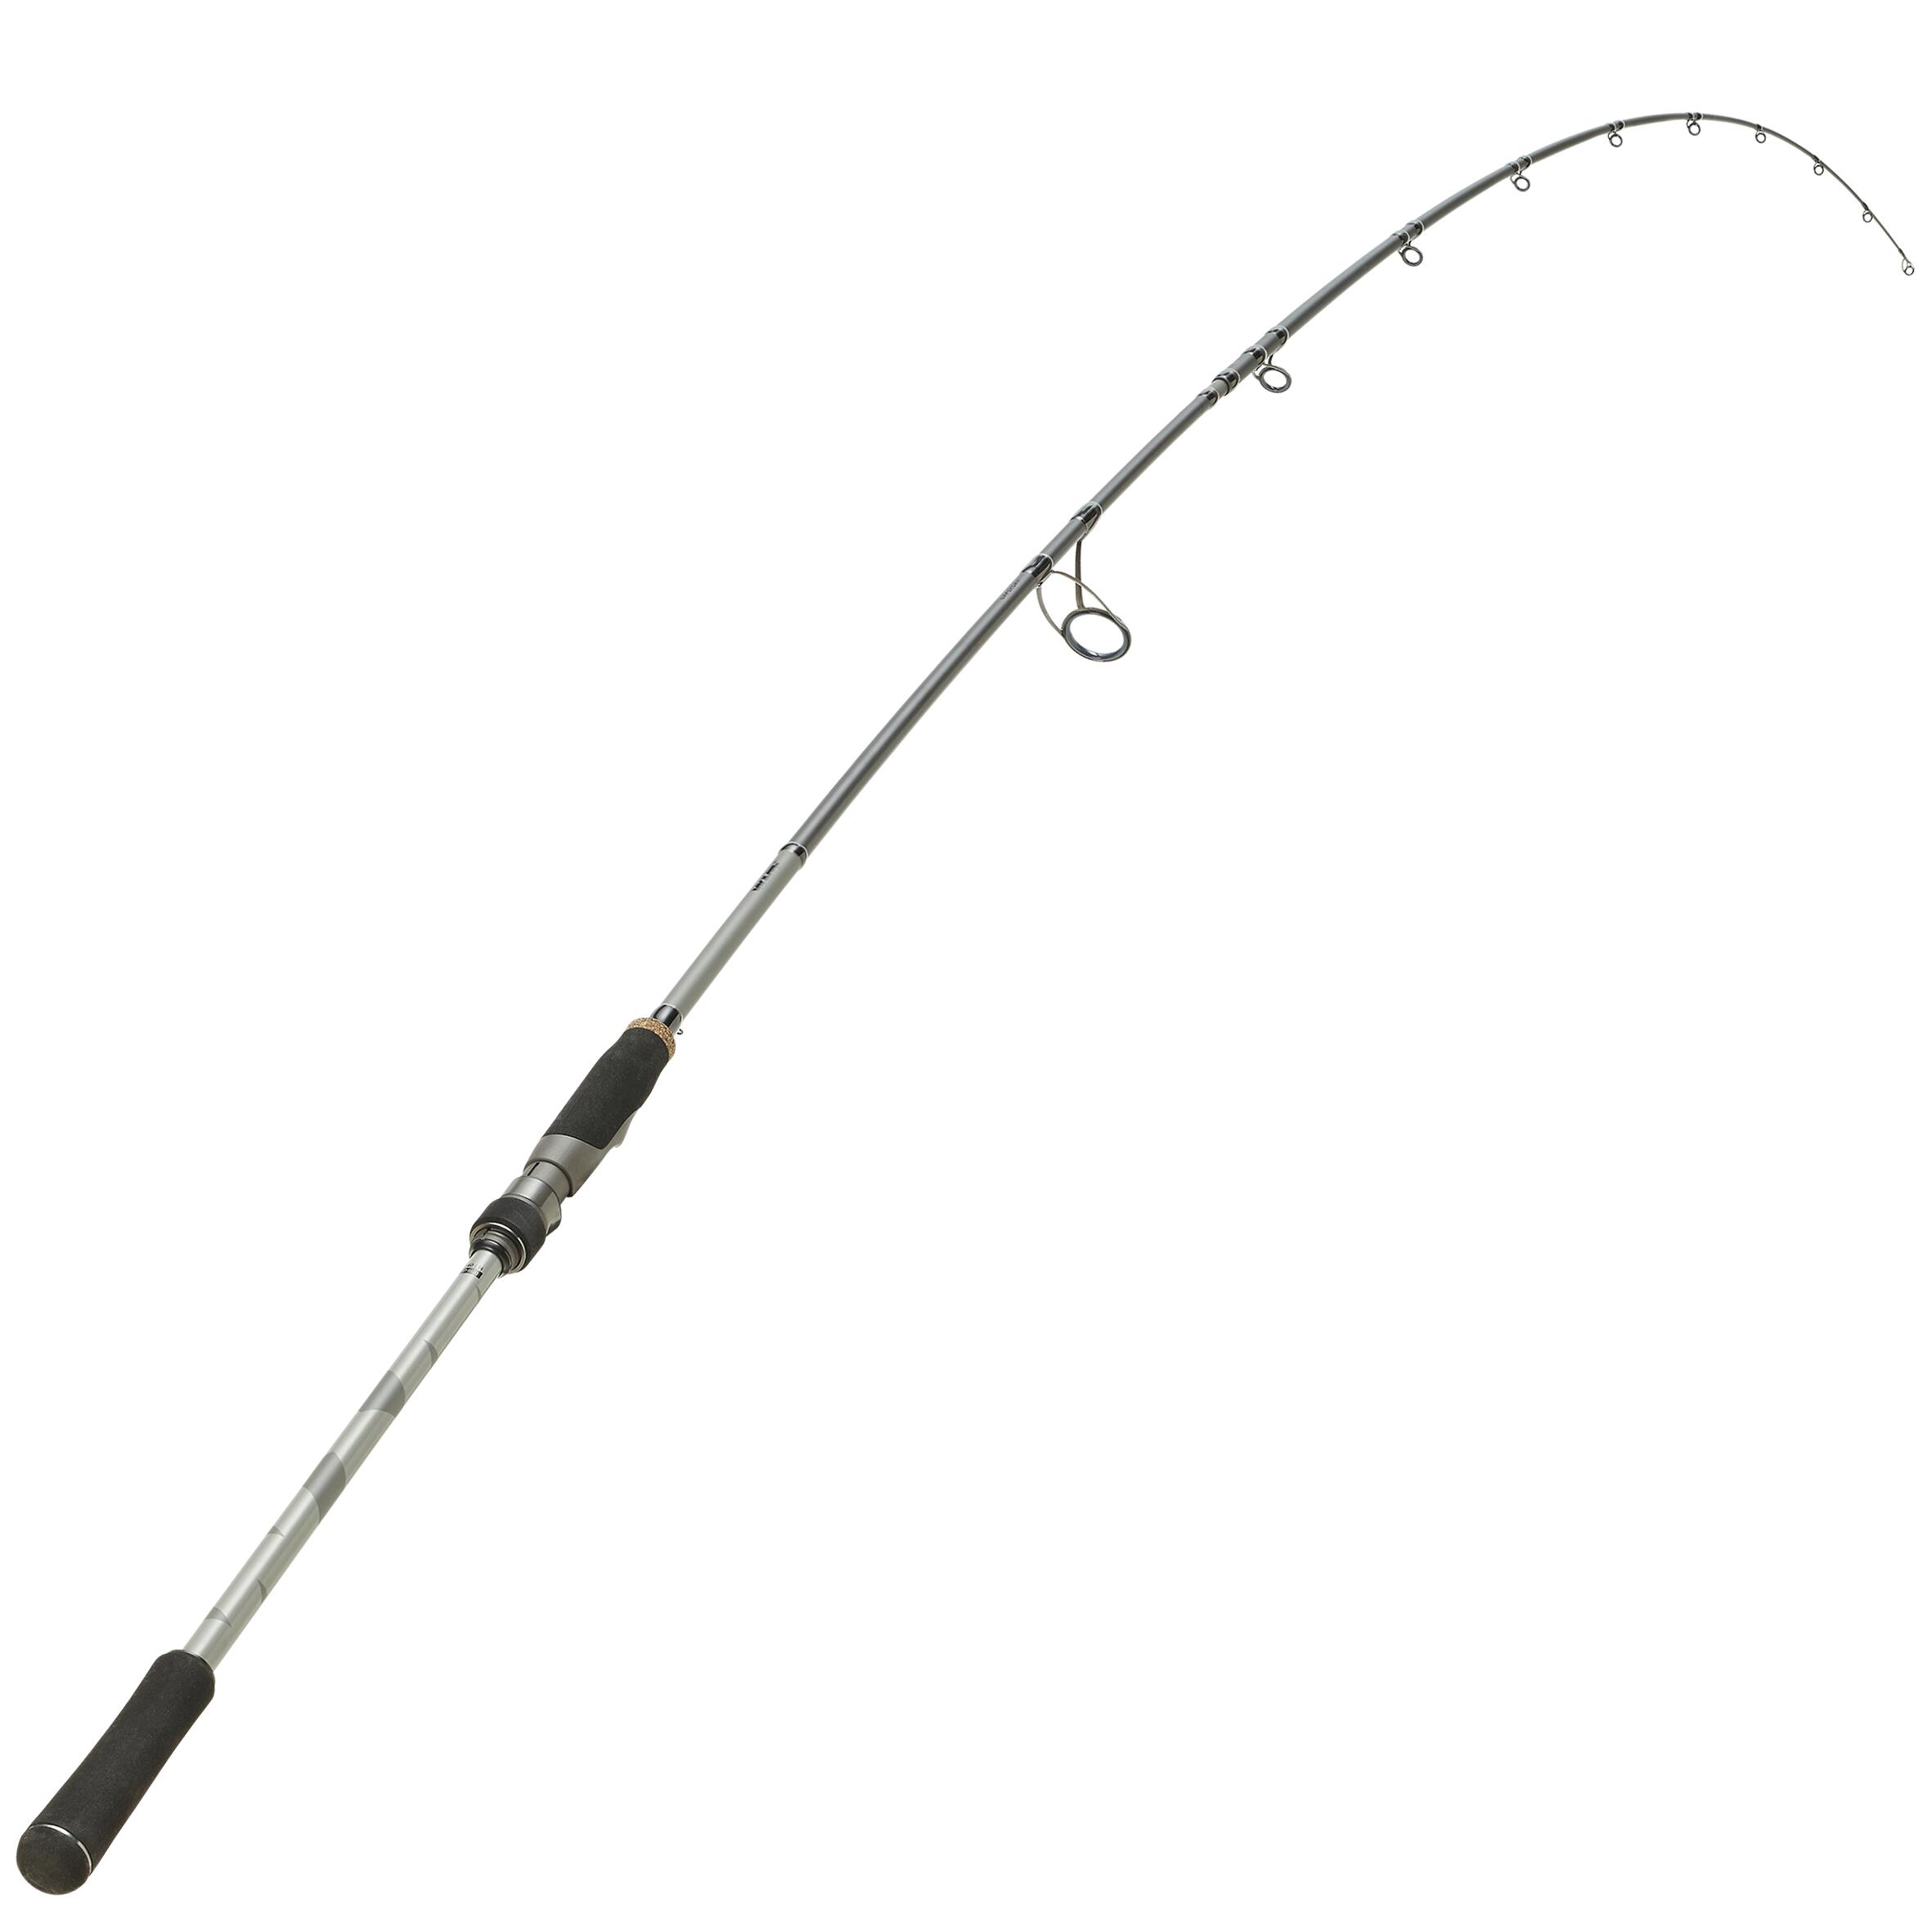 LURE FISHING ROD WXM-5 240 H 2/11